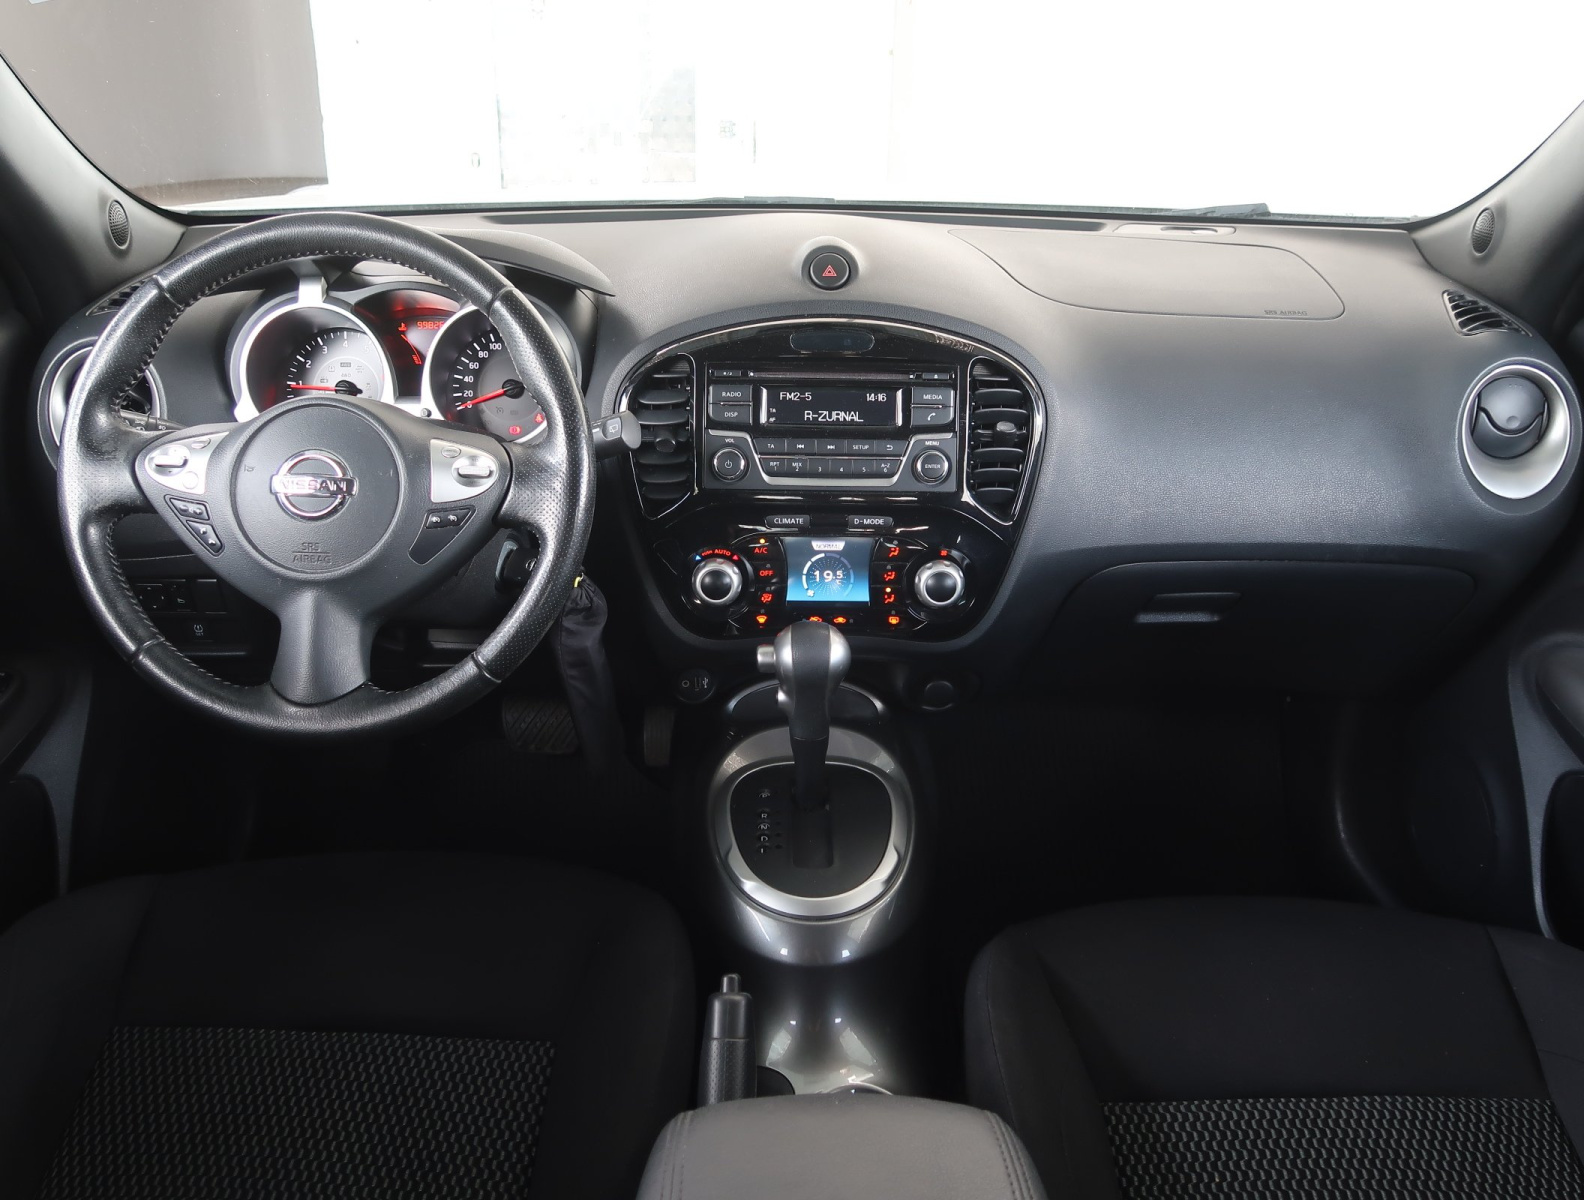 Nissan Juke, 2017, 1.6 i, 86kW